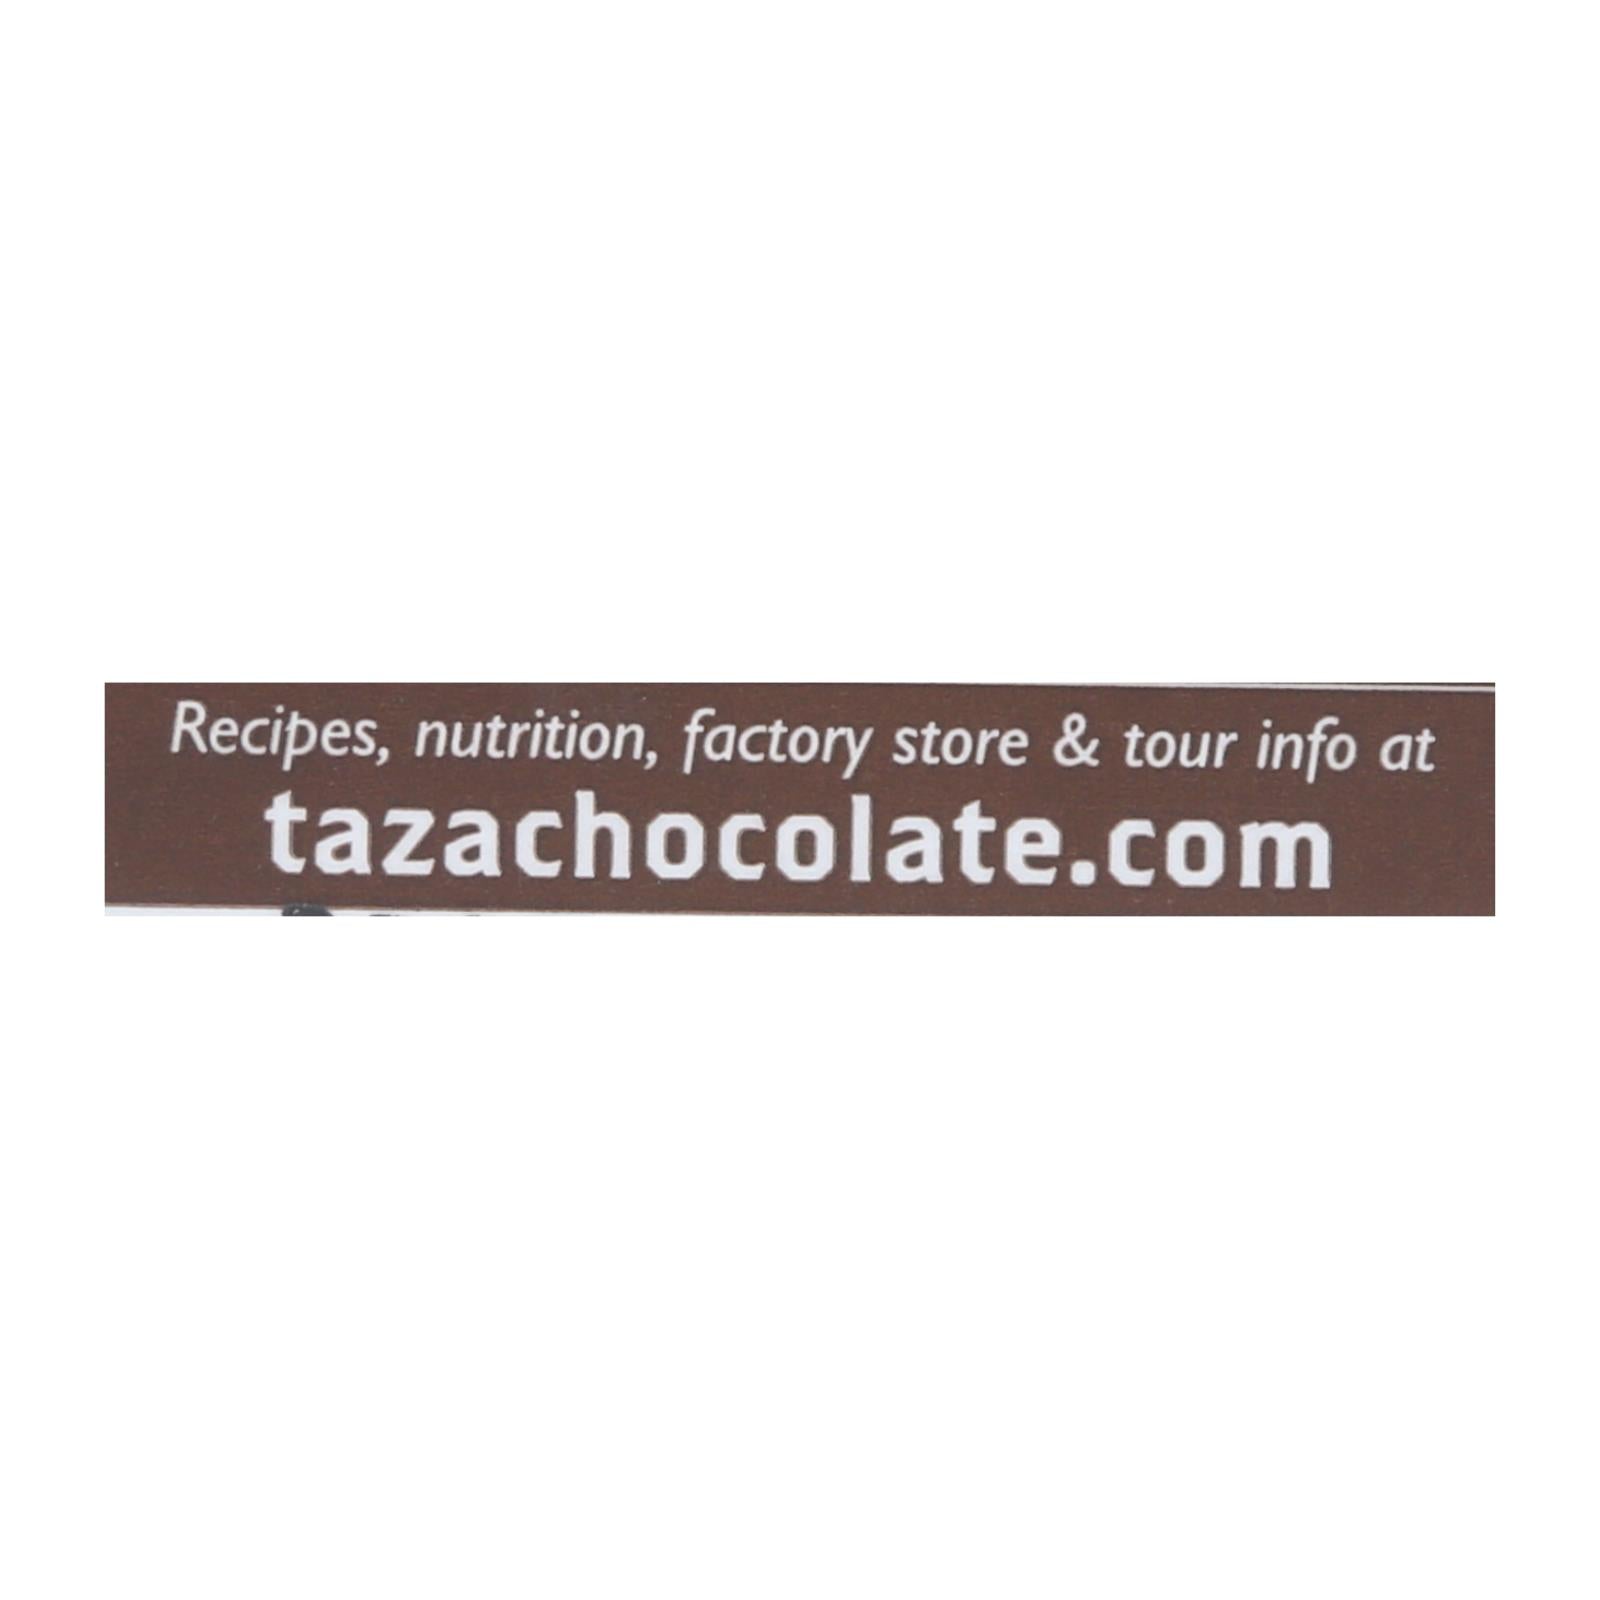 Taza Chocolate Organic Chocolate Mexicano Discs - 50 Percent Dark Chocolate - Vanilla - 2.7 oz - Case of 12